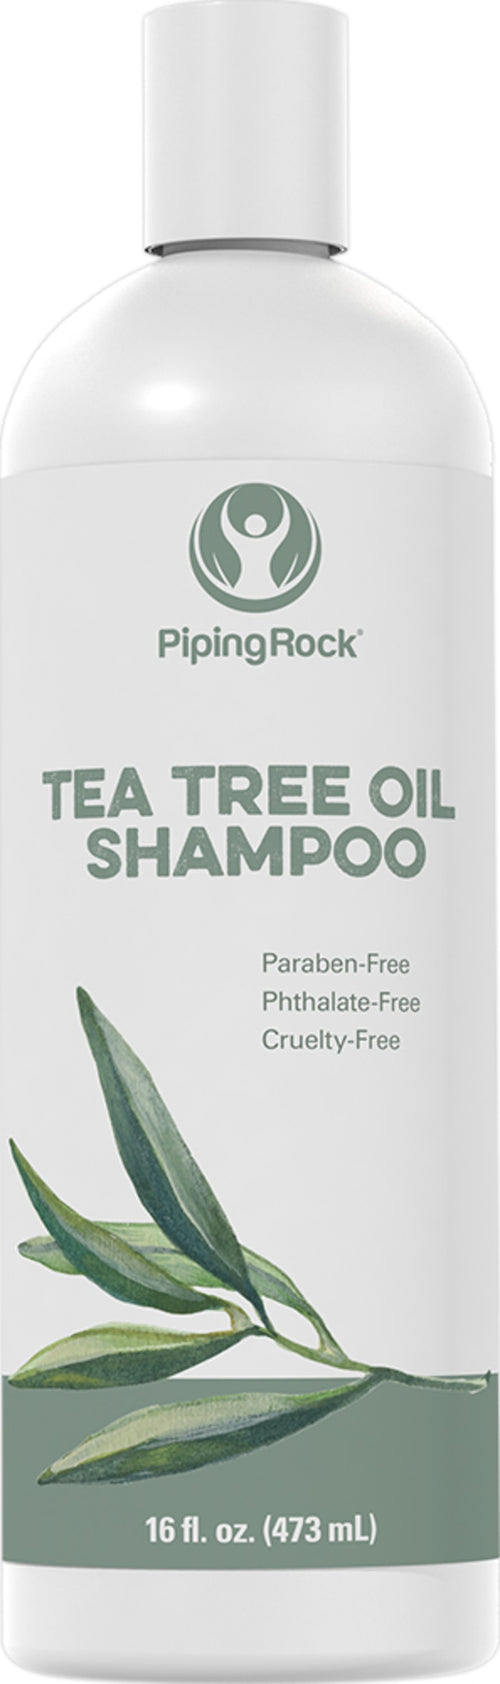 Tea Tree Oil Shampoo, 16 fl oz (473 mL) Bottle